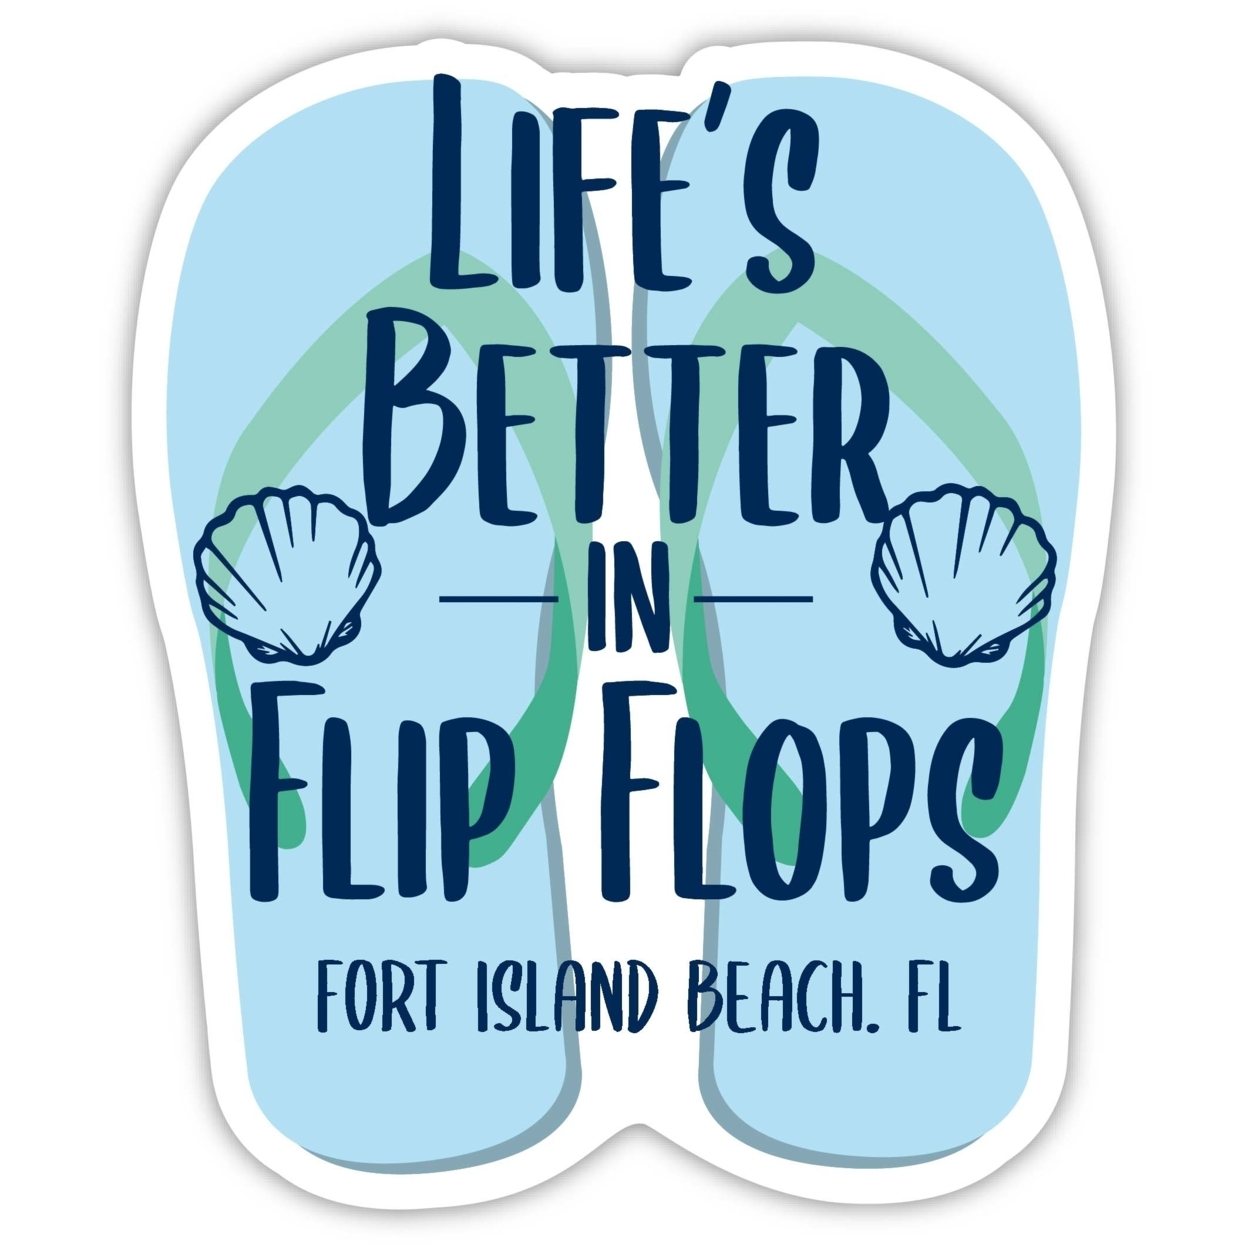 Fort Island Beach Florida Souvenir 4 Inch Vinyl Decal Sticker Flip Flop Design